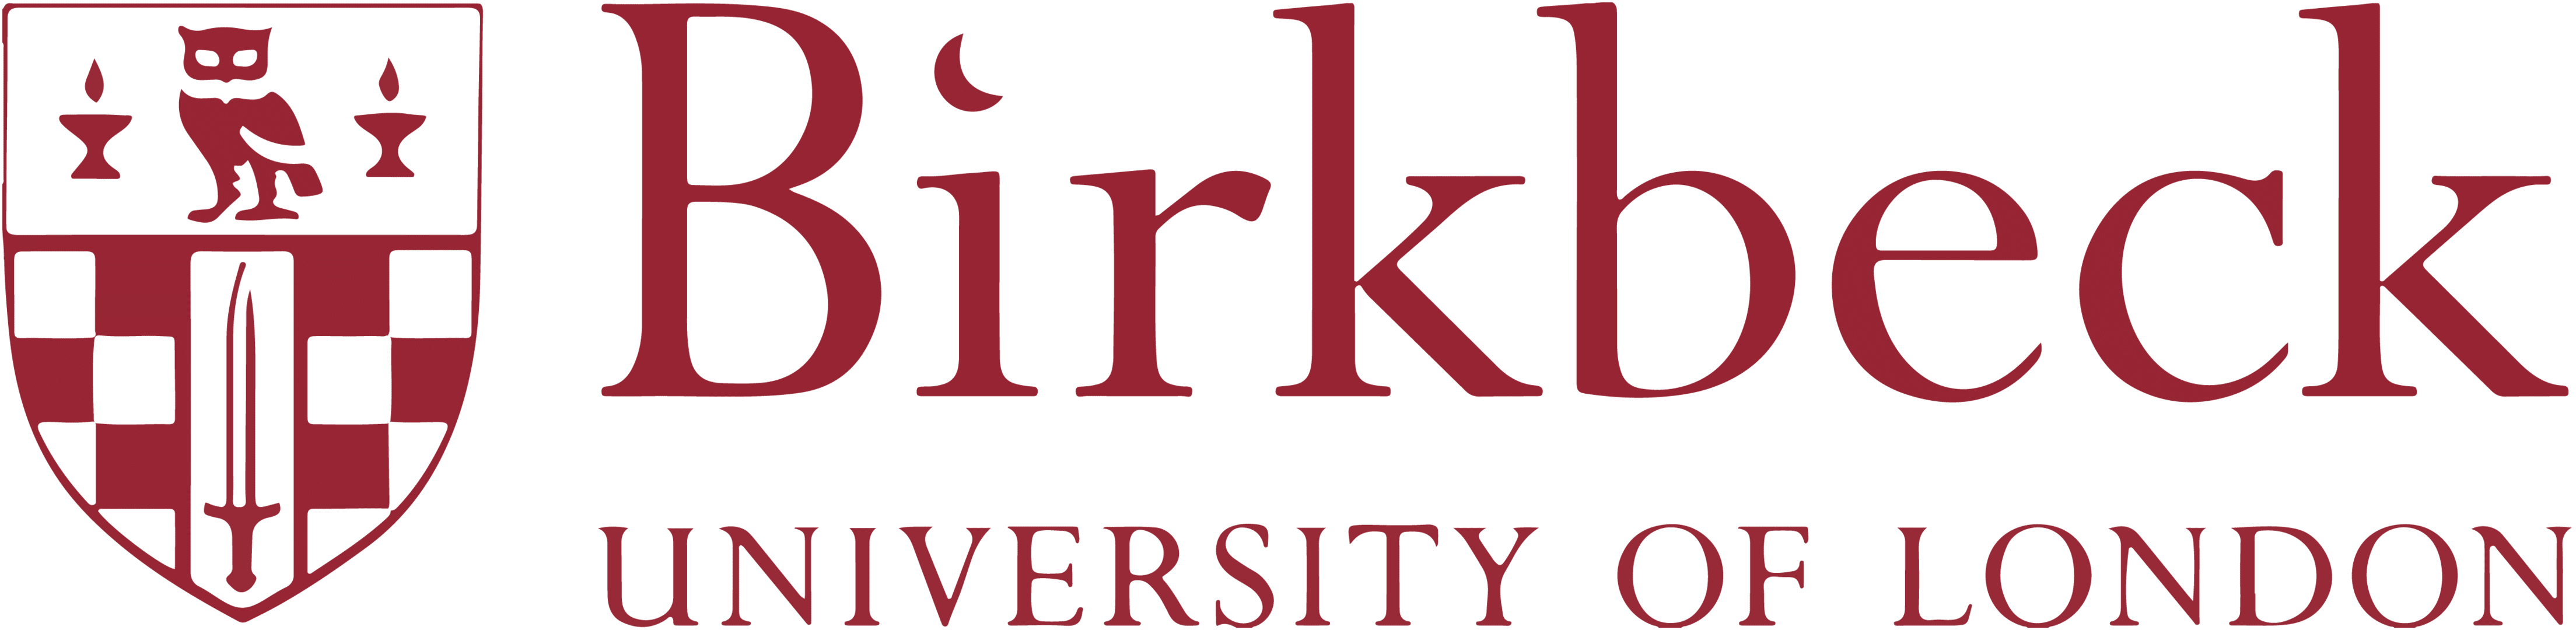 birkbeck logo 3